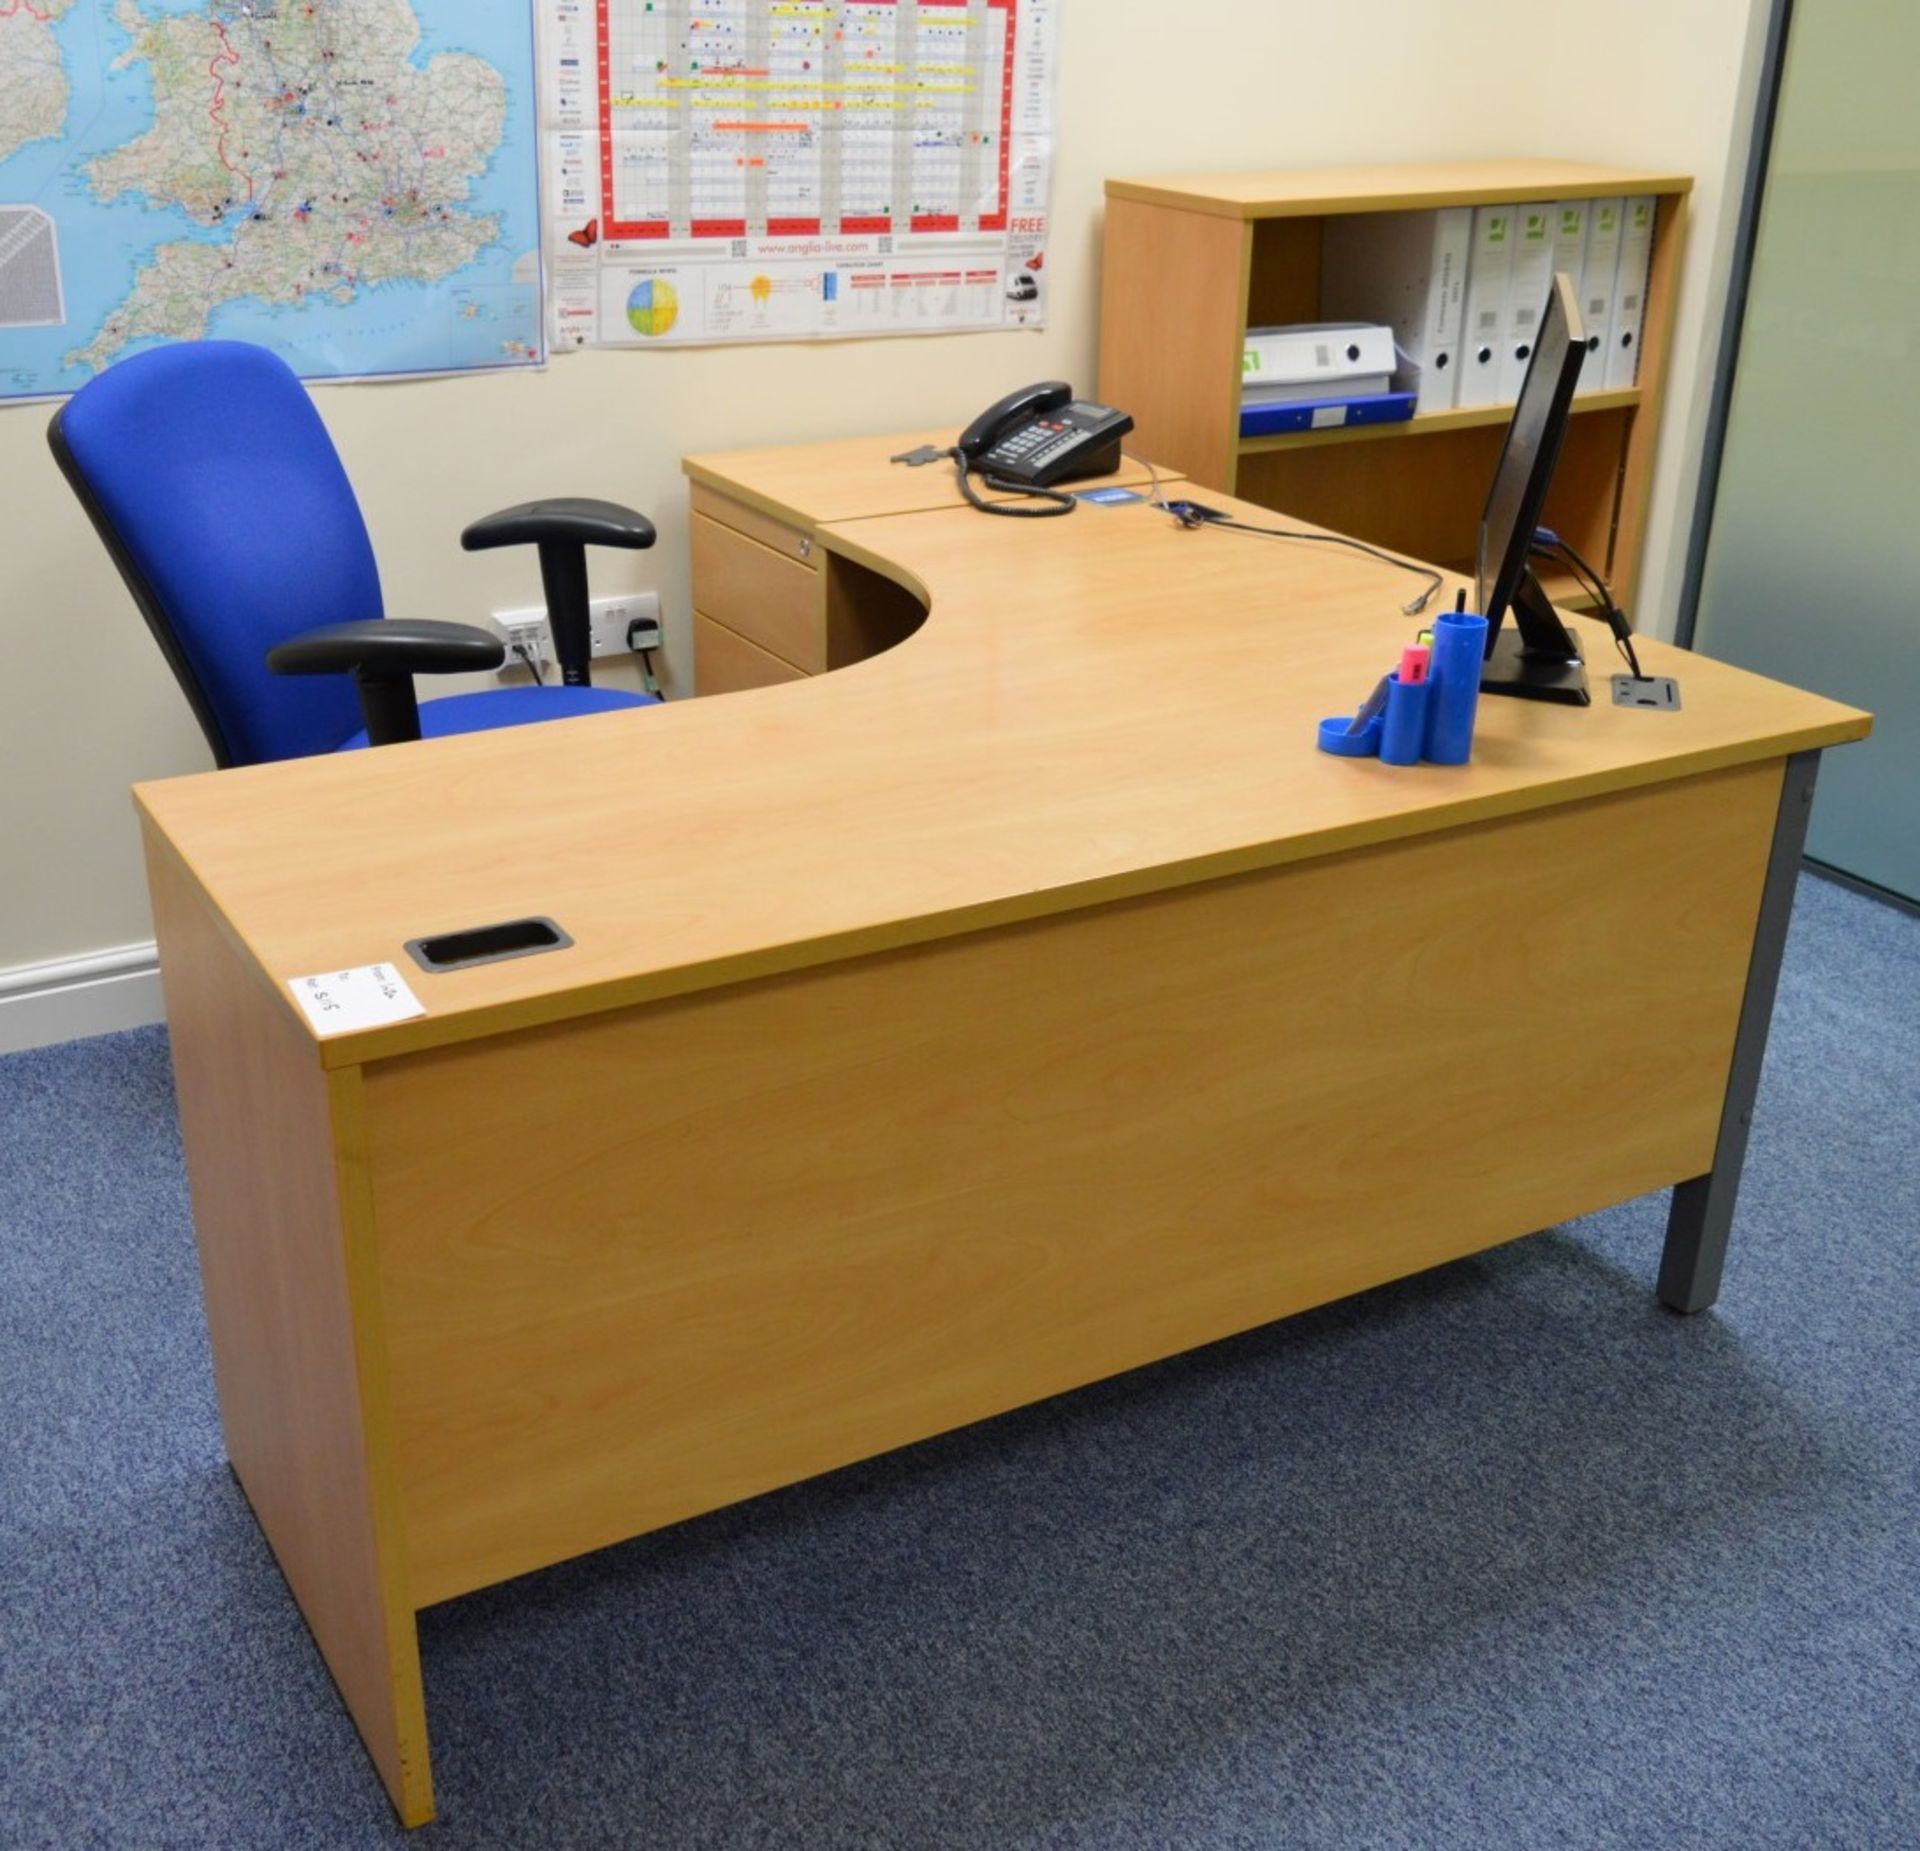 1 x Office Furniture Set Including Large Desk, Drawer Pedestal, Swivel Chair and Shelving Unit -